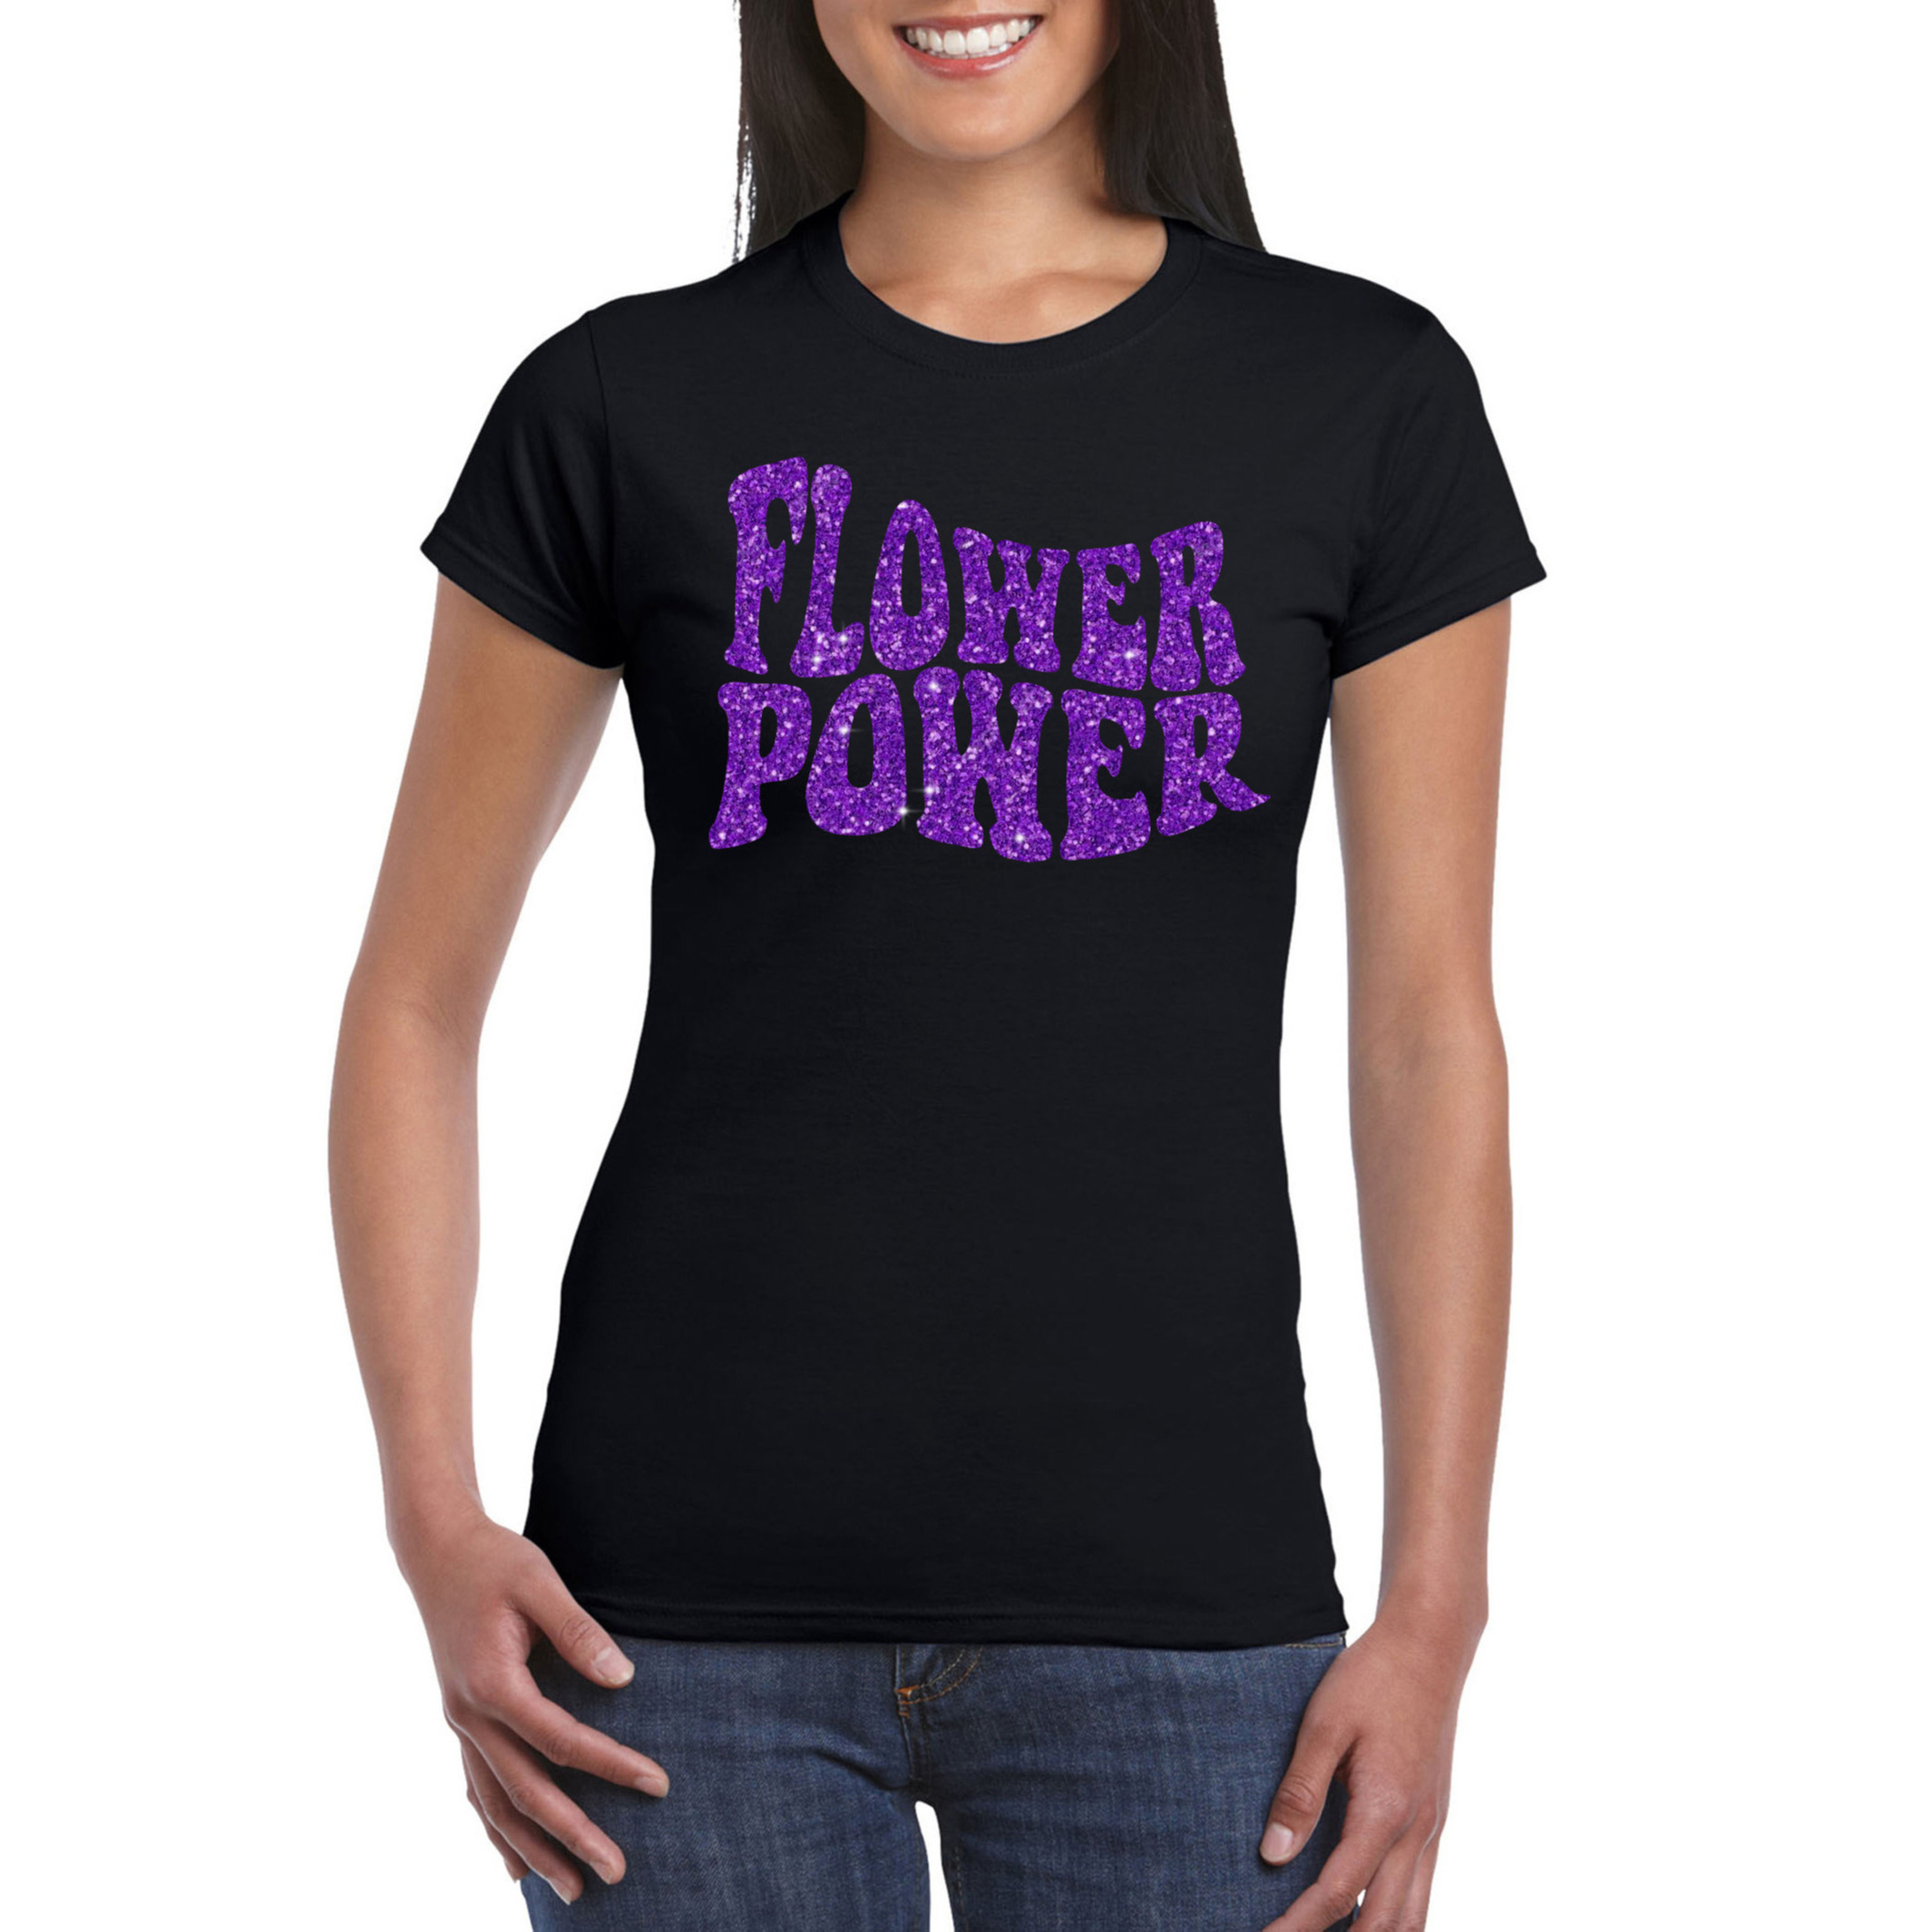 Zwart Flower Power t-shirt met paarse letters dames